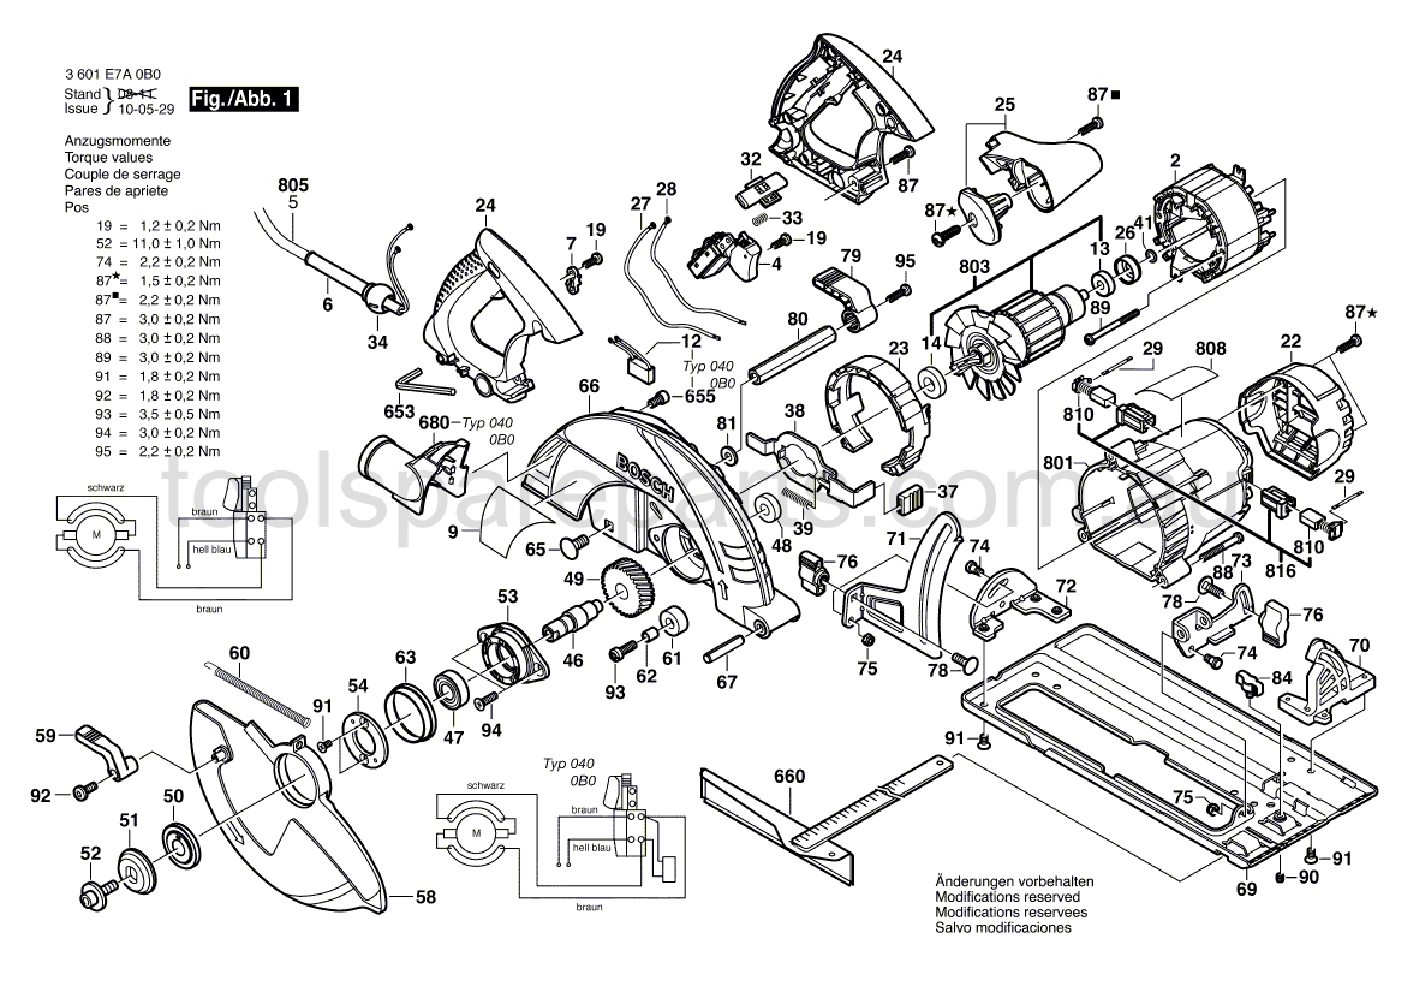 Bosch GKS 235 3601E7A040  Diagram 1